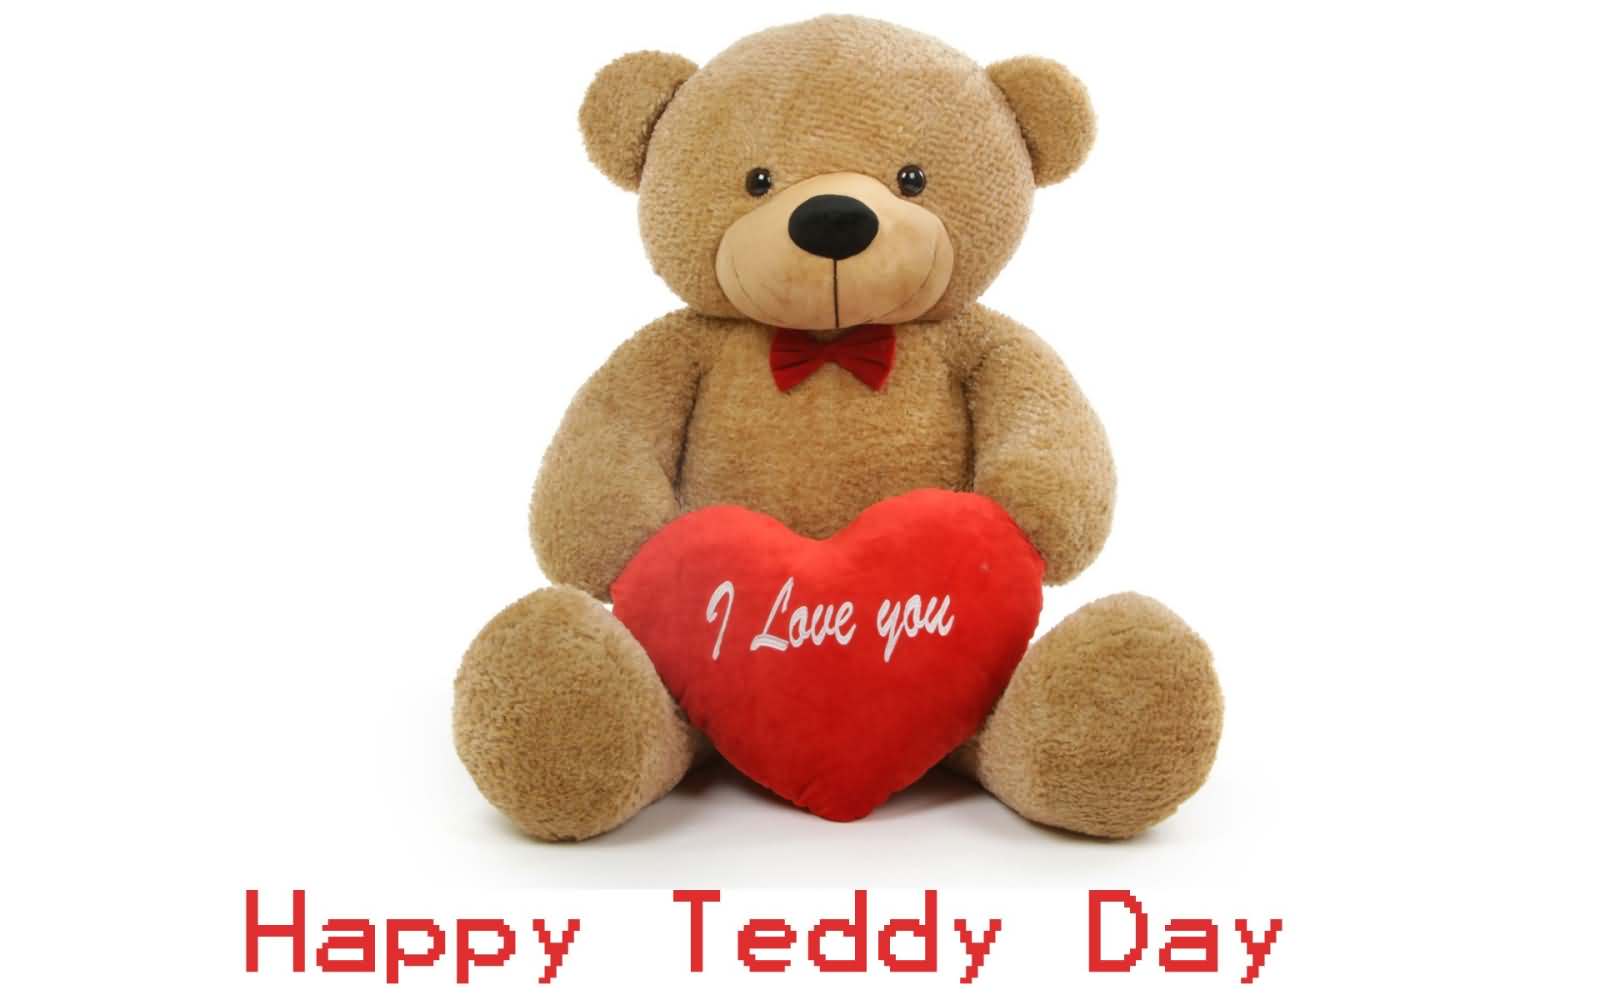 Happy teddy day teddy bear with heart